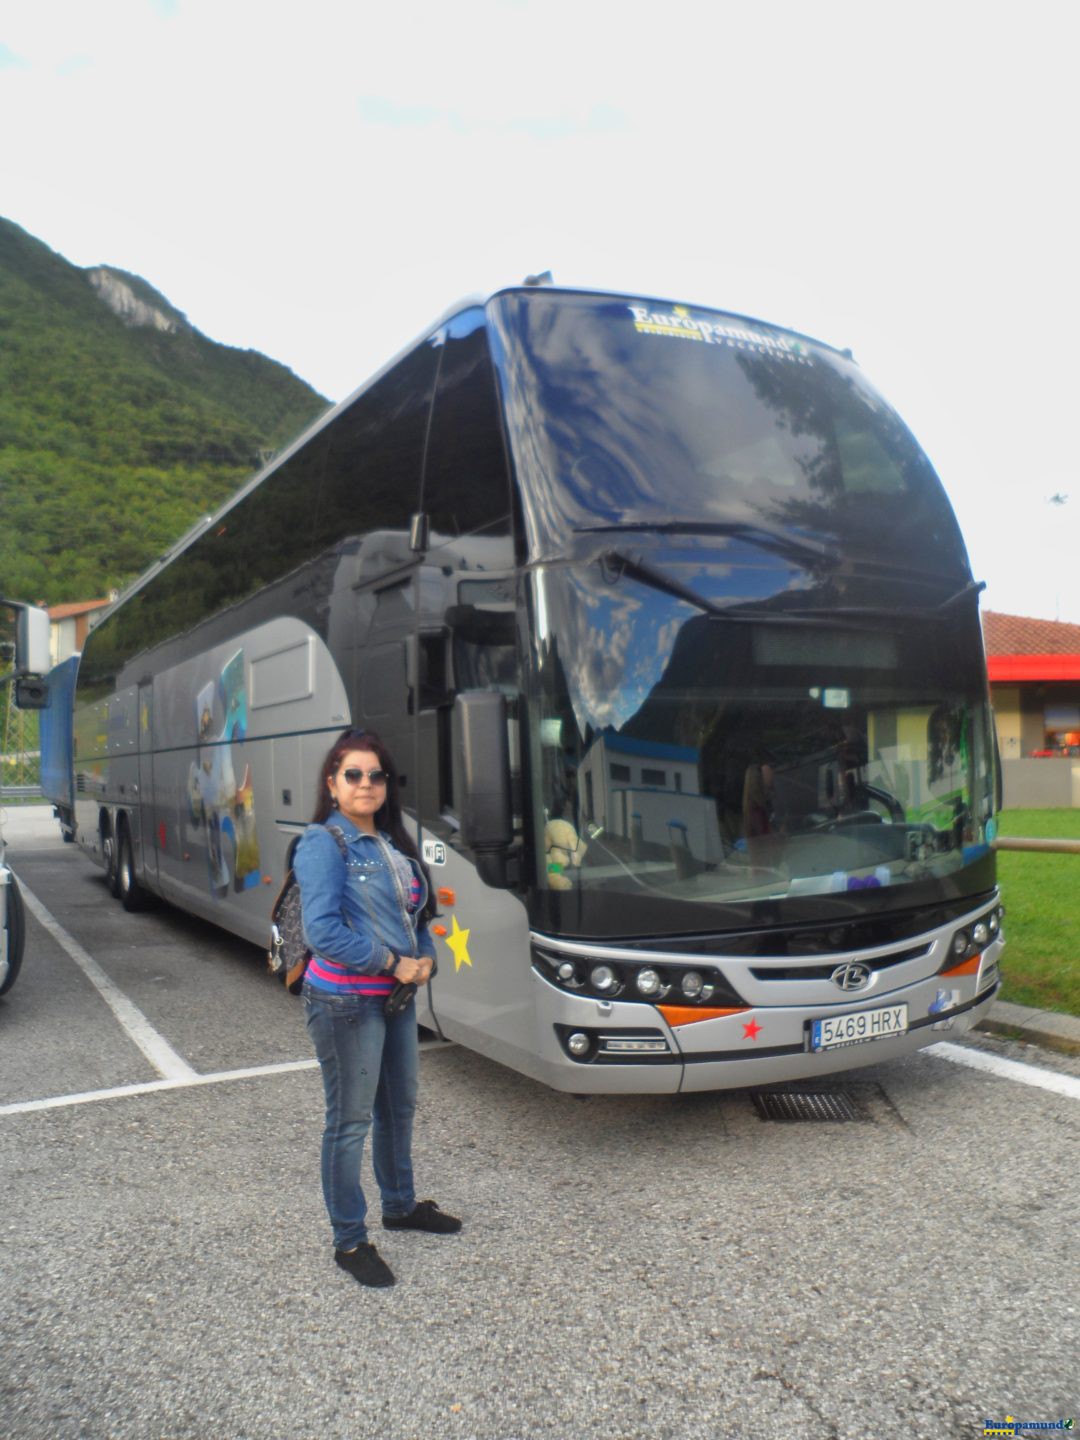 Europamundo buses